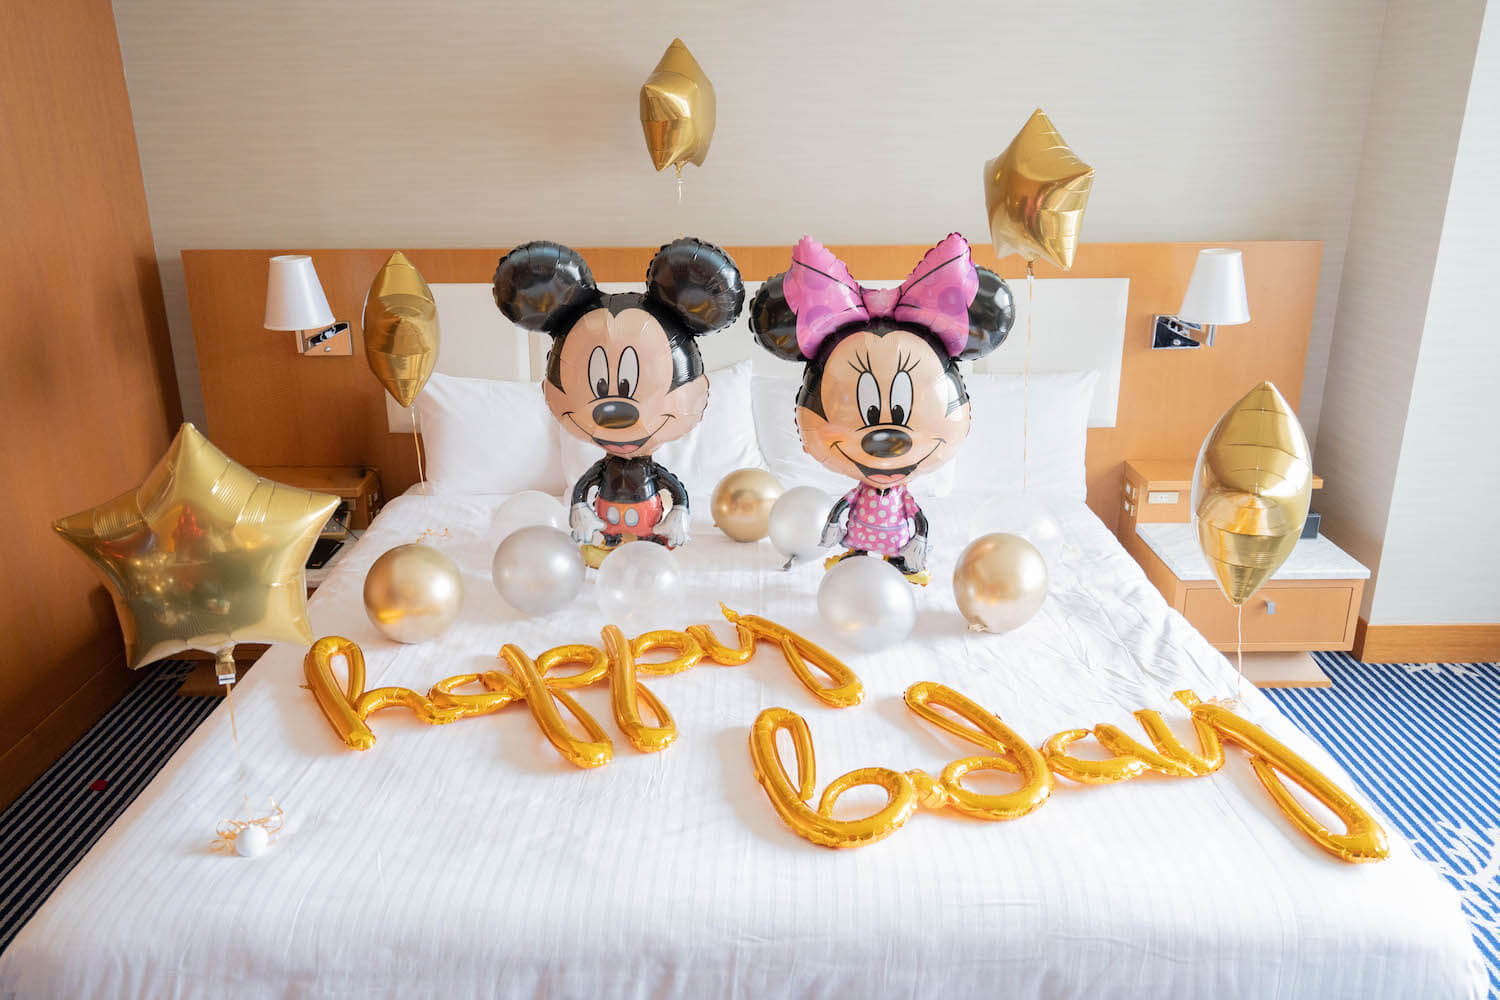 No 166 ミッキーミニーのバースデーサプライズ バルーン出張装飾 ホテルサプライズ 誕生日やプロポーズはアニプラバルーン